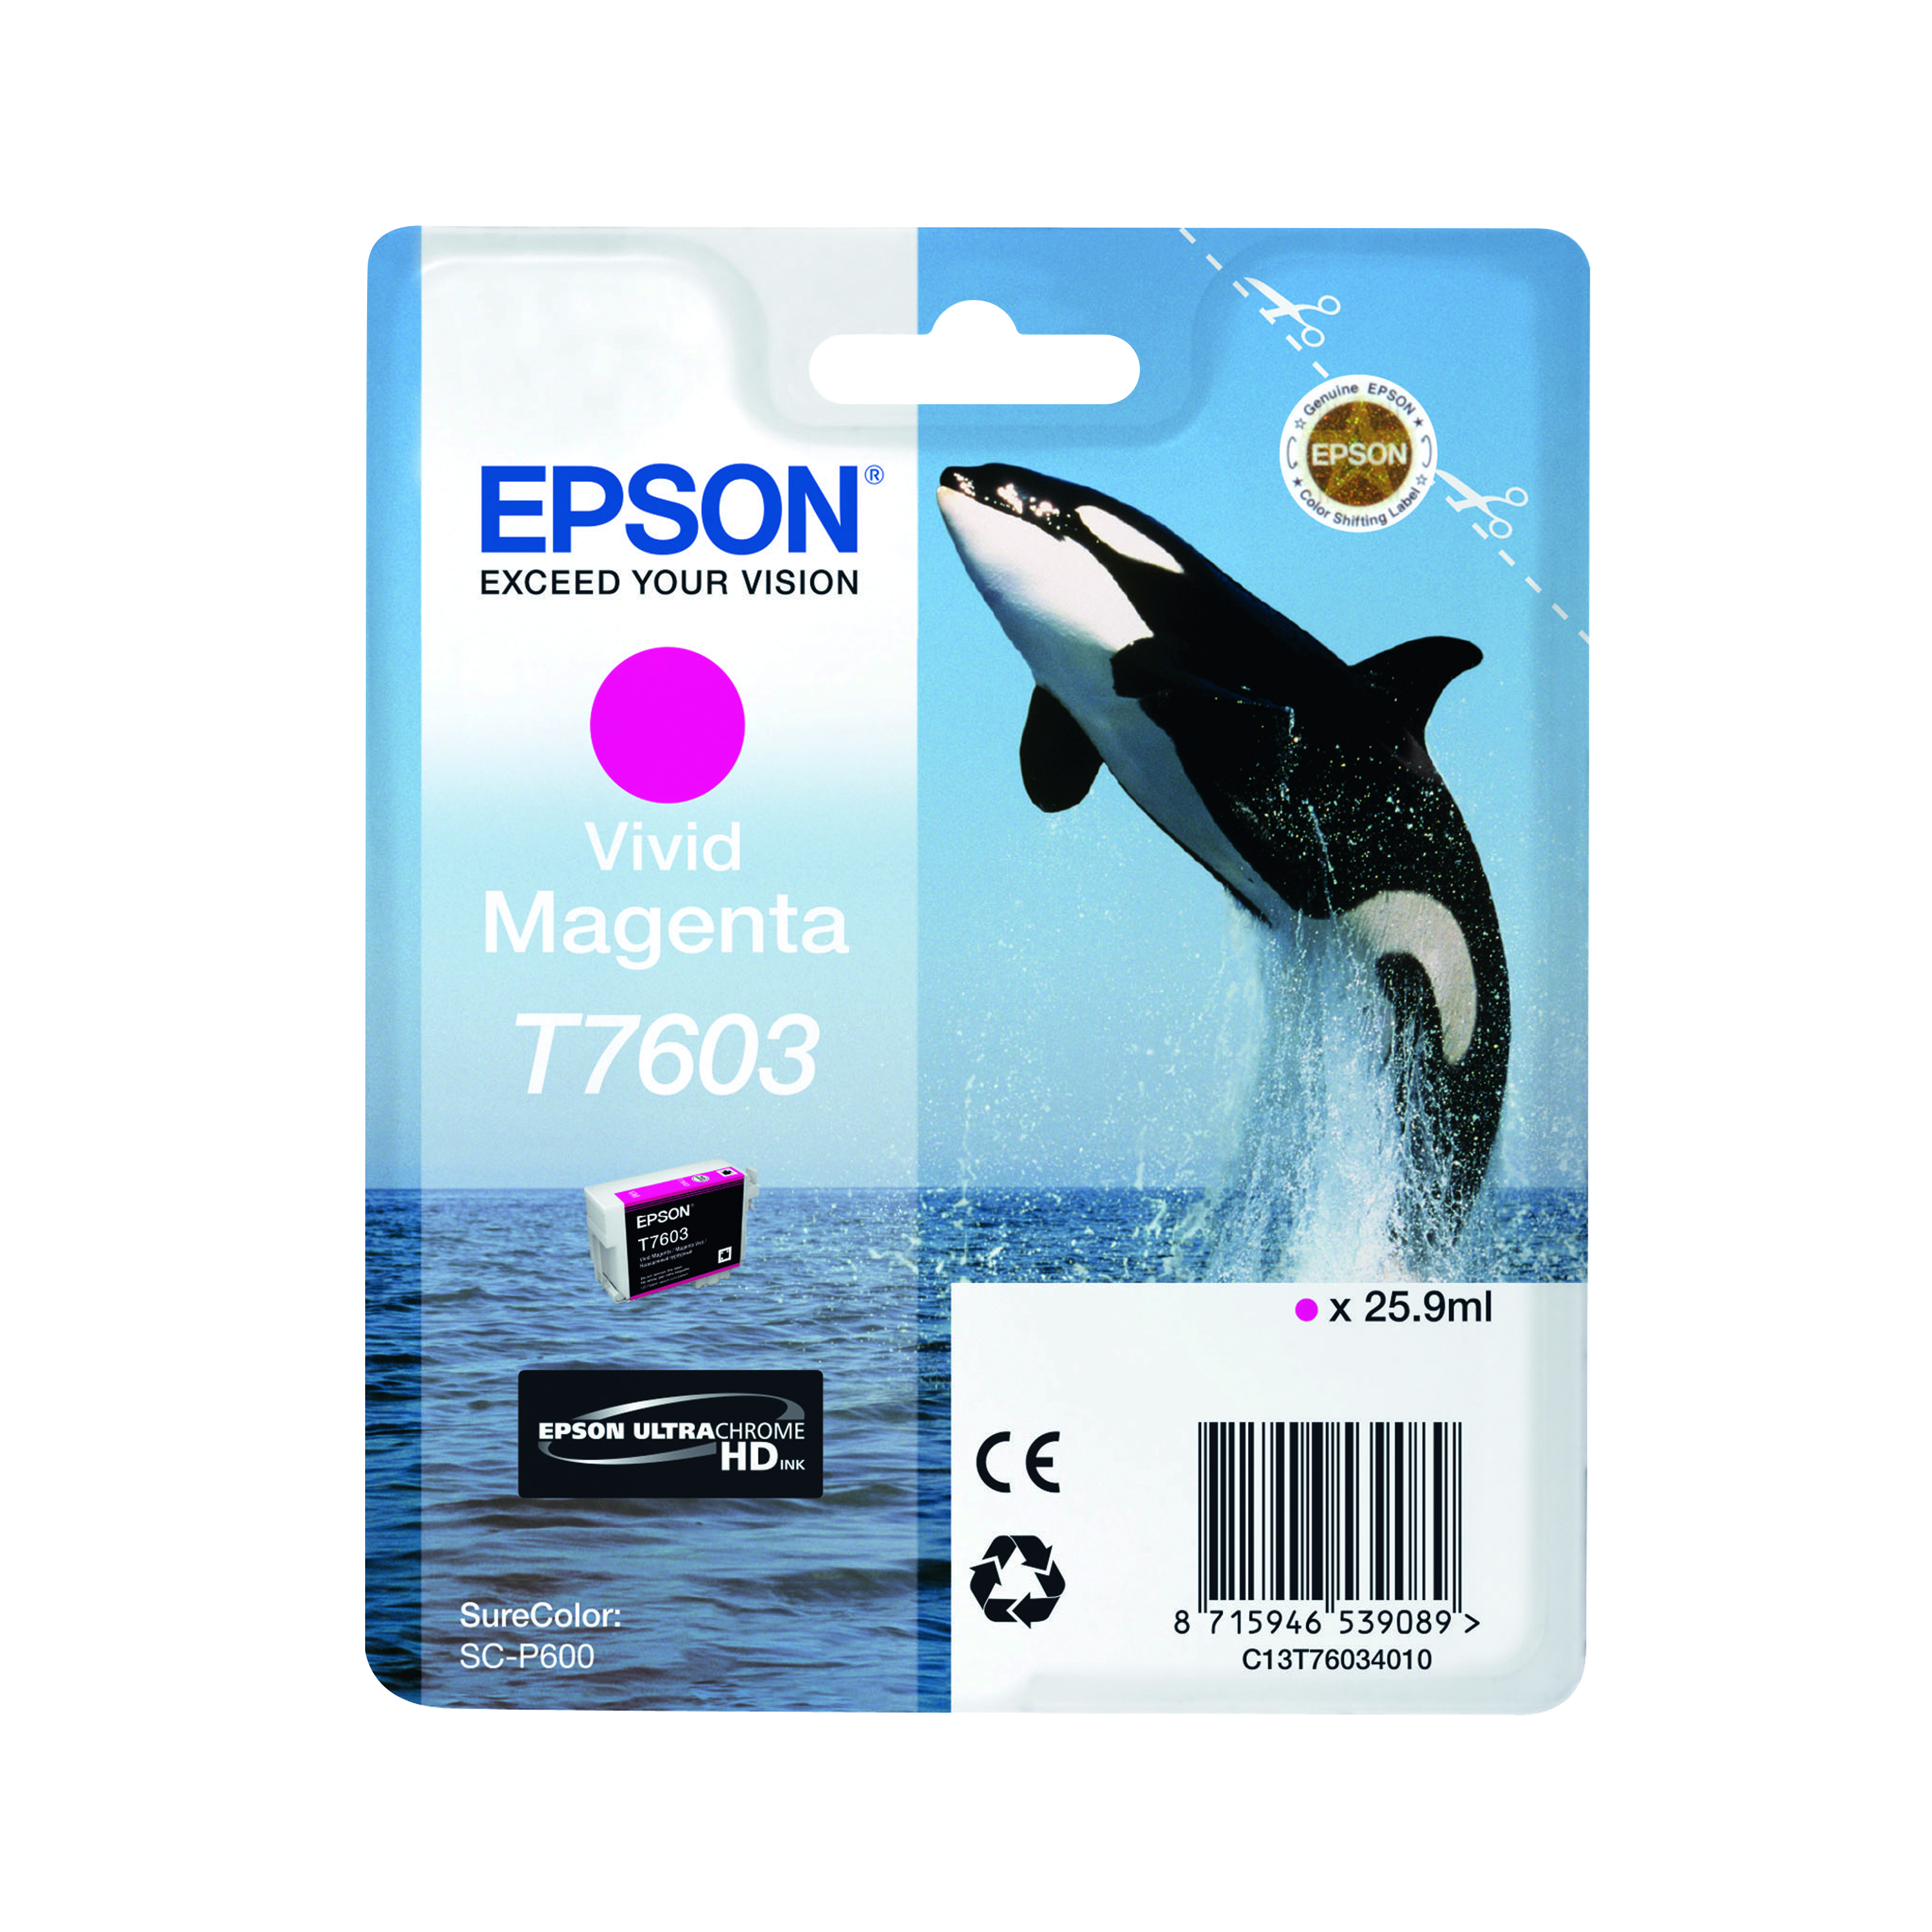 Epson T7603 Ink Cartridge Killer Whale Vivid Magenta C13T76034010